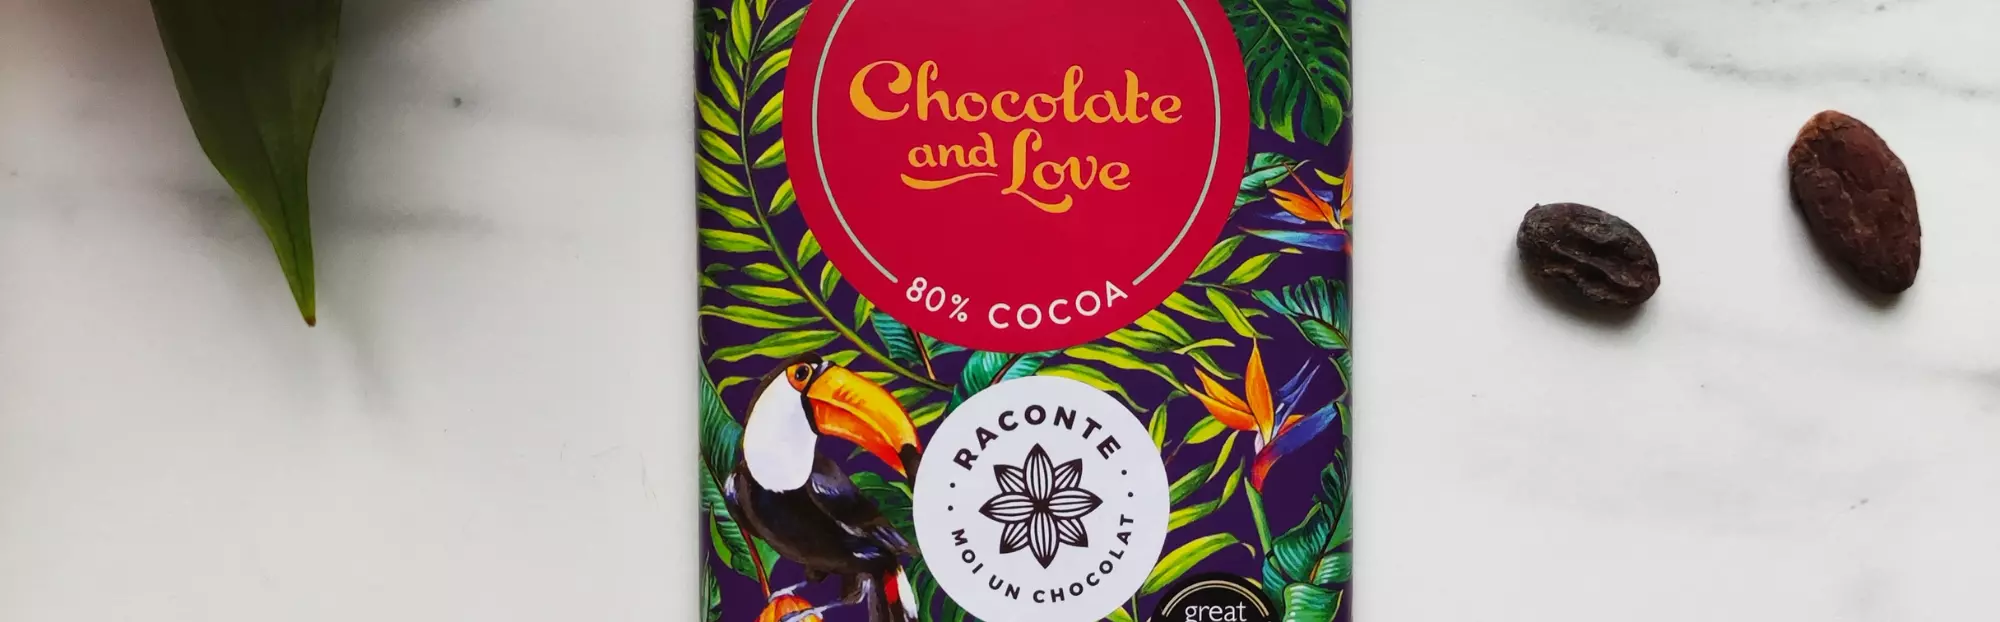 chocolate and love, chocolat suisse, chocolat durable